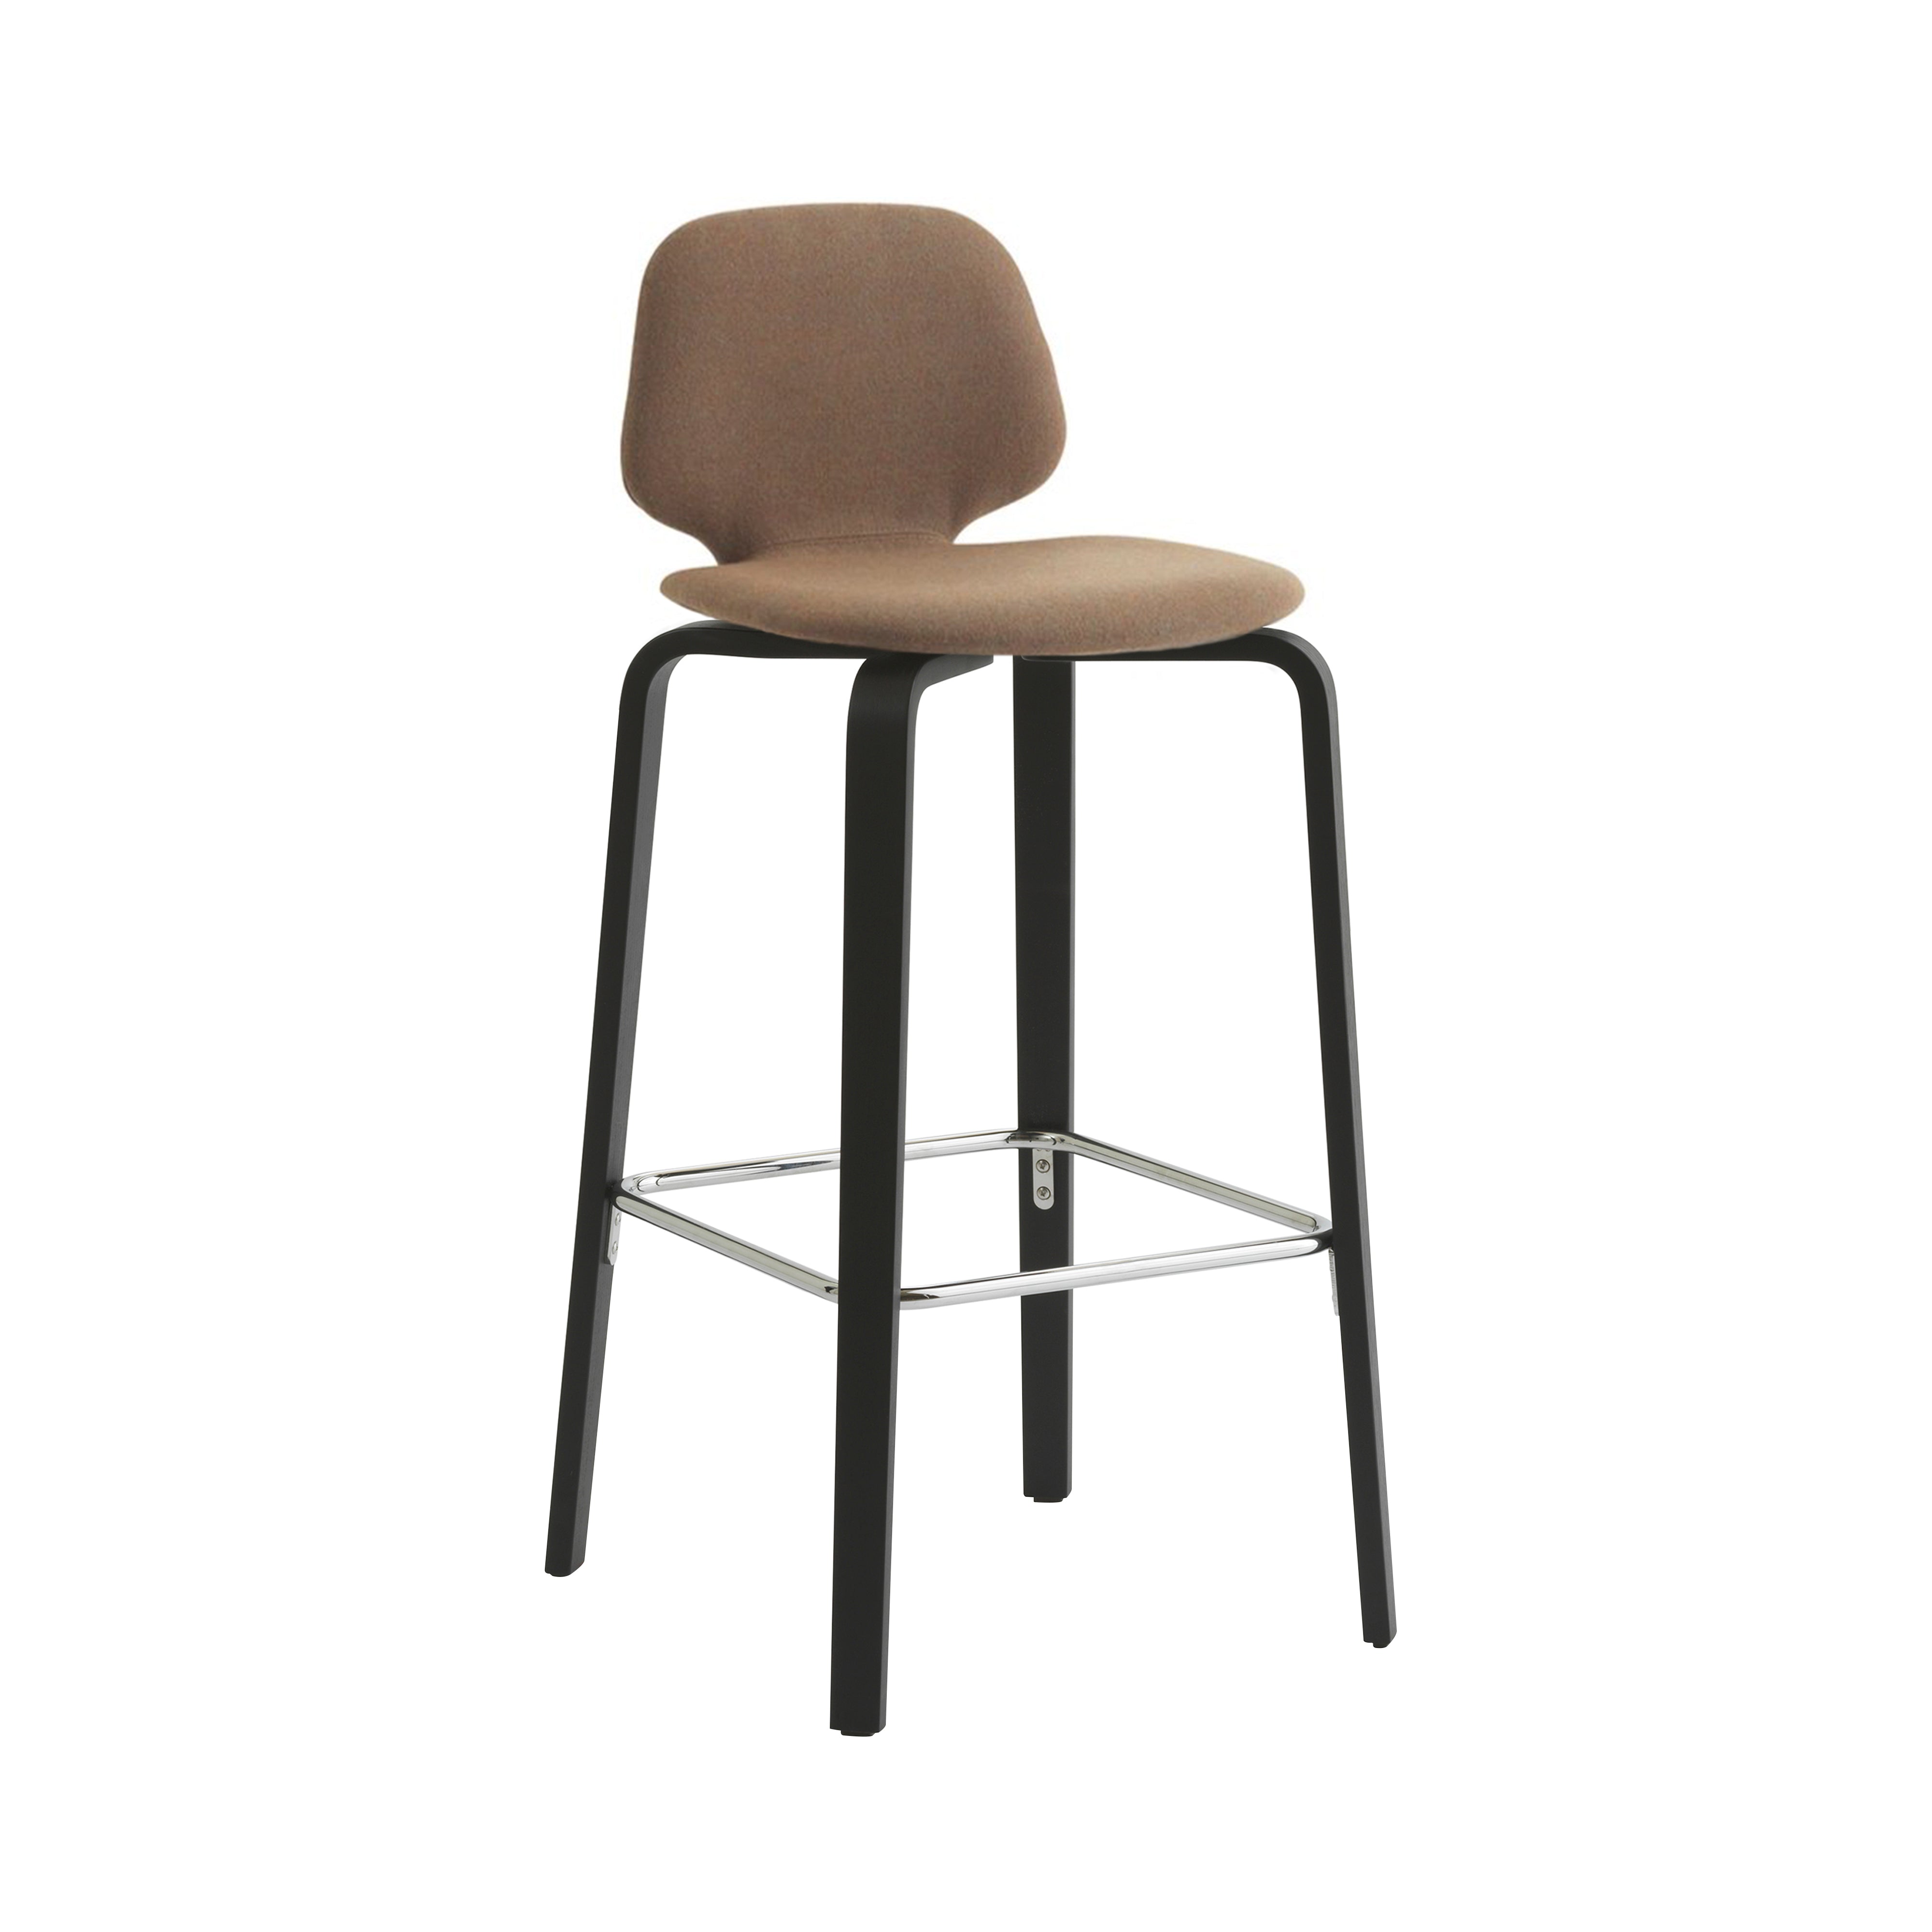 My Chair Bar + Counter Stool: Wood Base + Fully Upholstered + Bar + Black